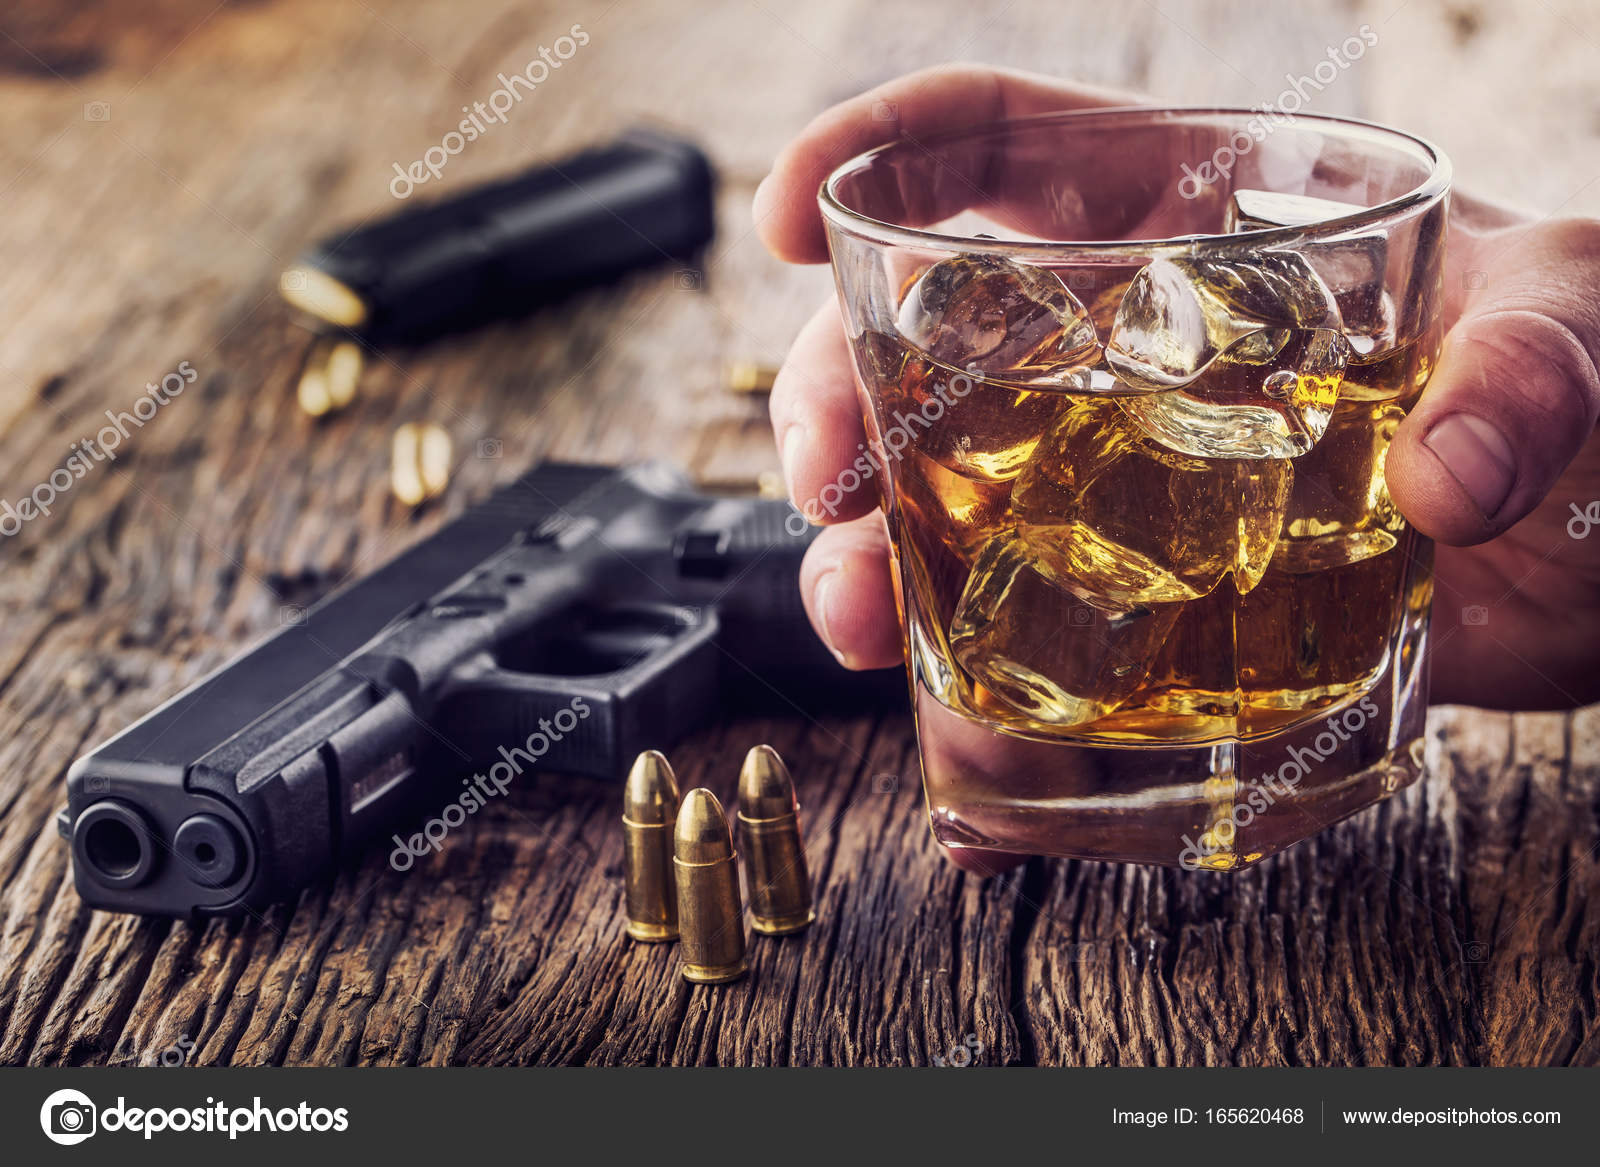 https://st3.depositphotos.com/1590501/16562/i/1600/depositphotos_165620468-stock-photo-gun-and-alcohol-9mm-pistol.jpg